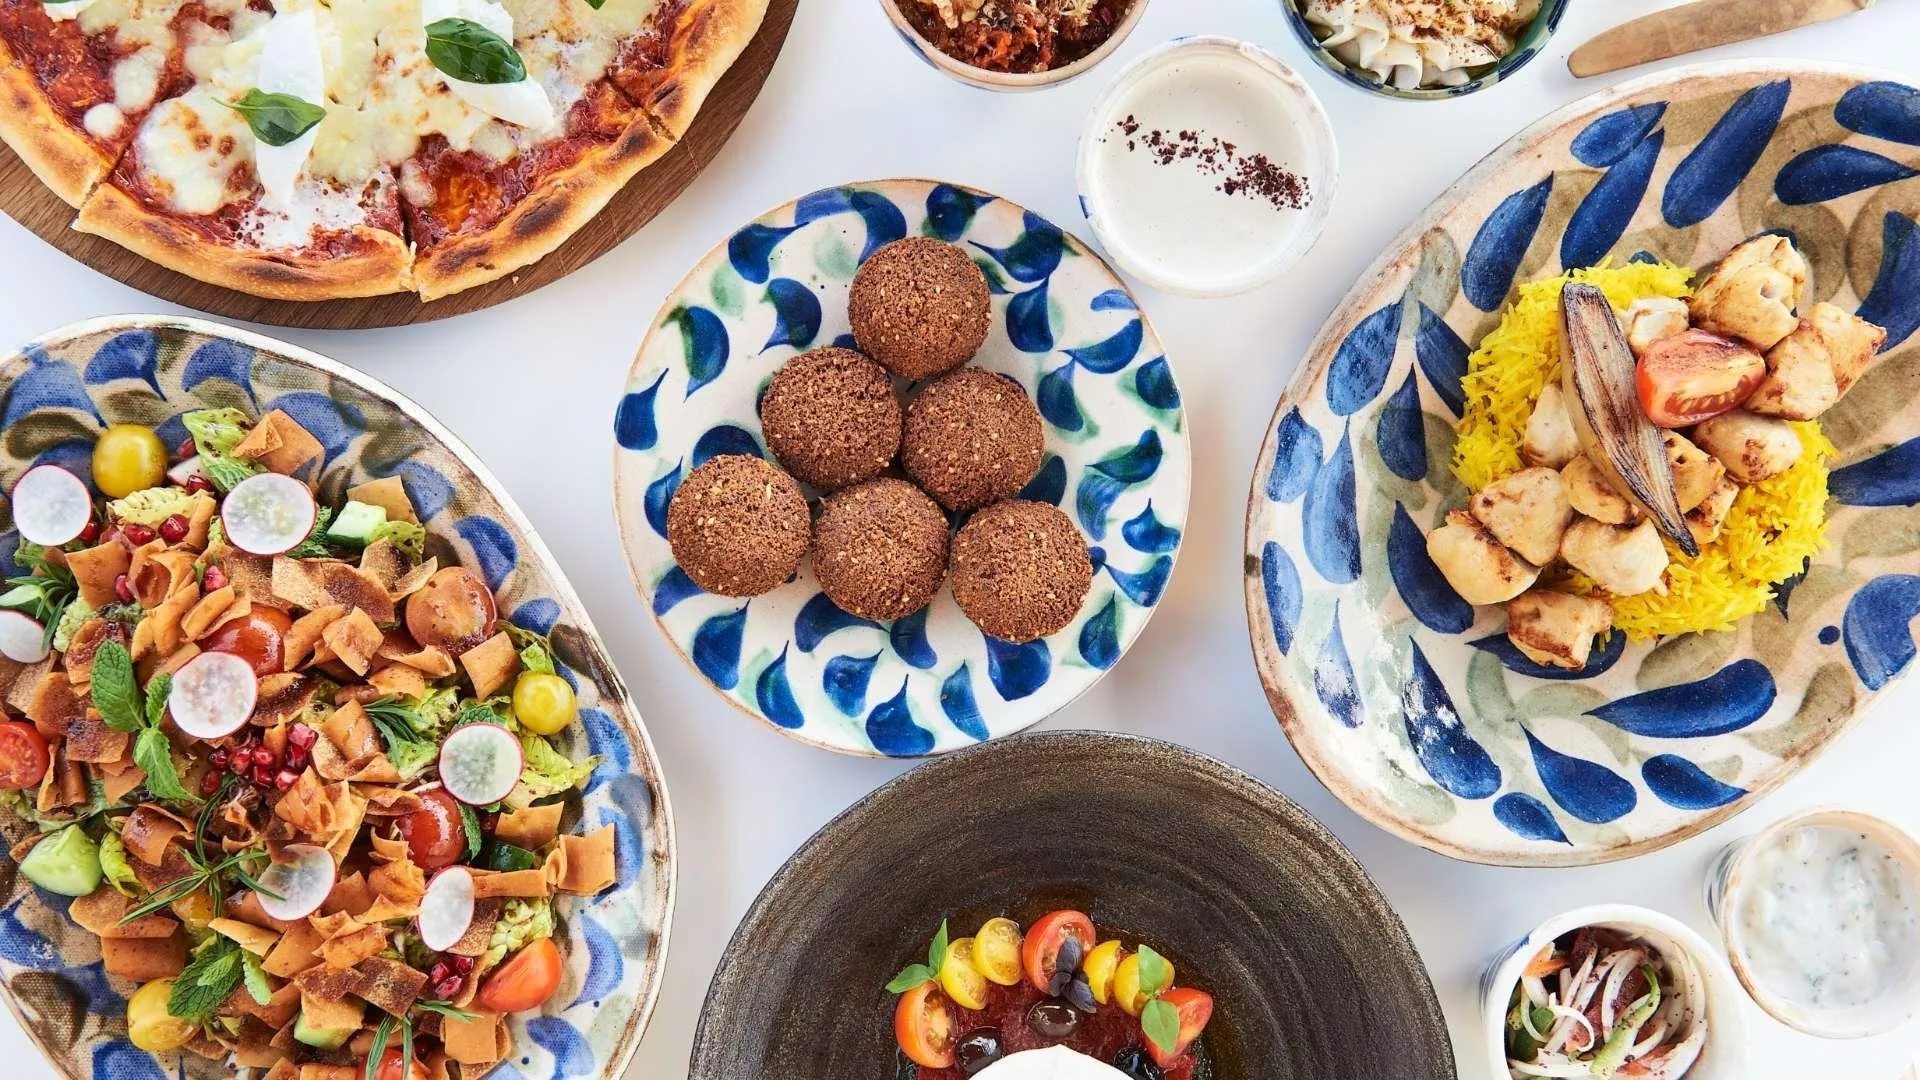 أبرز عروض افطار رمضان 2020 في دبي